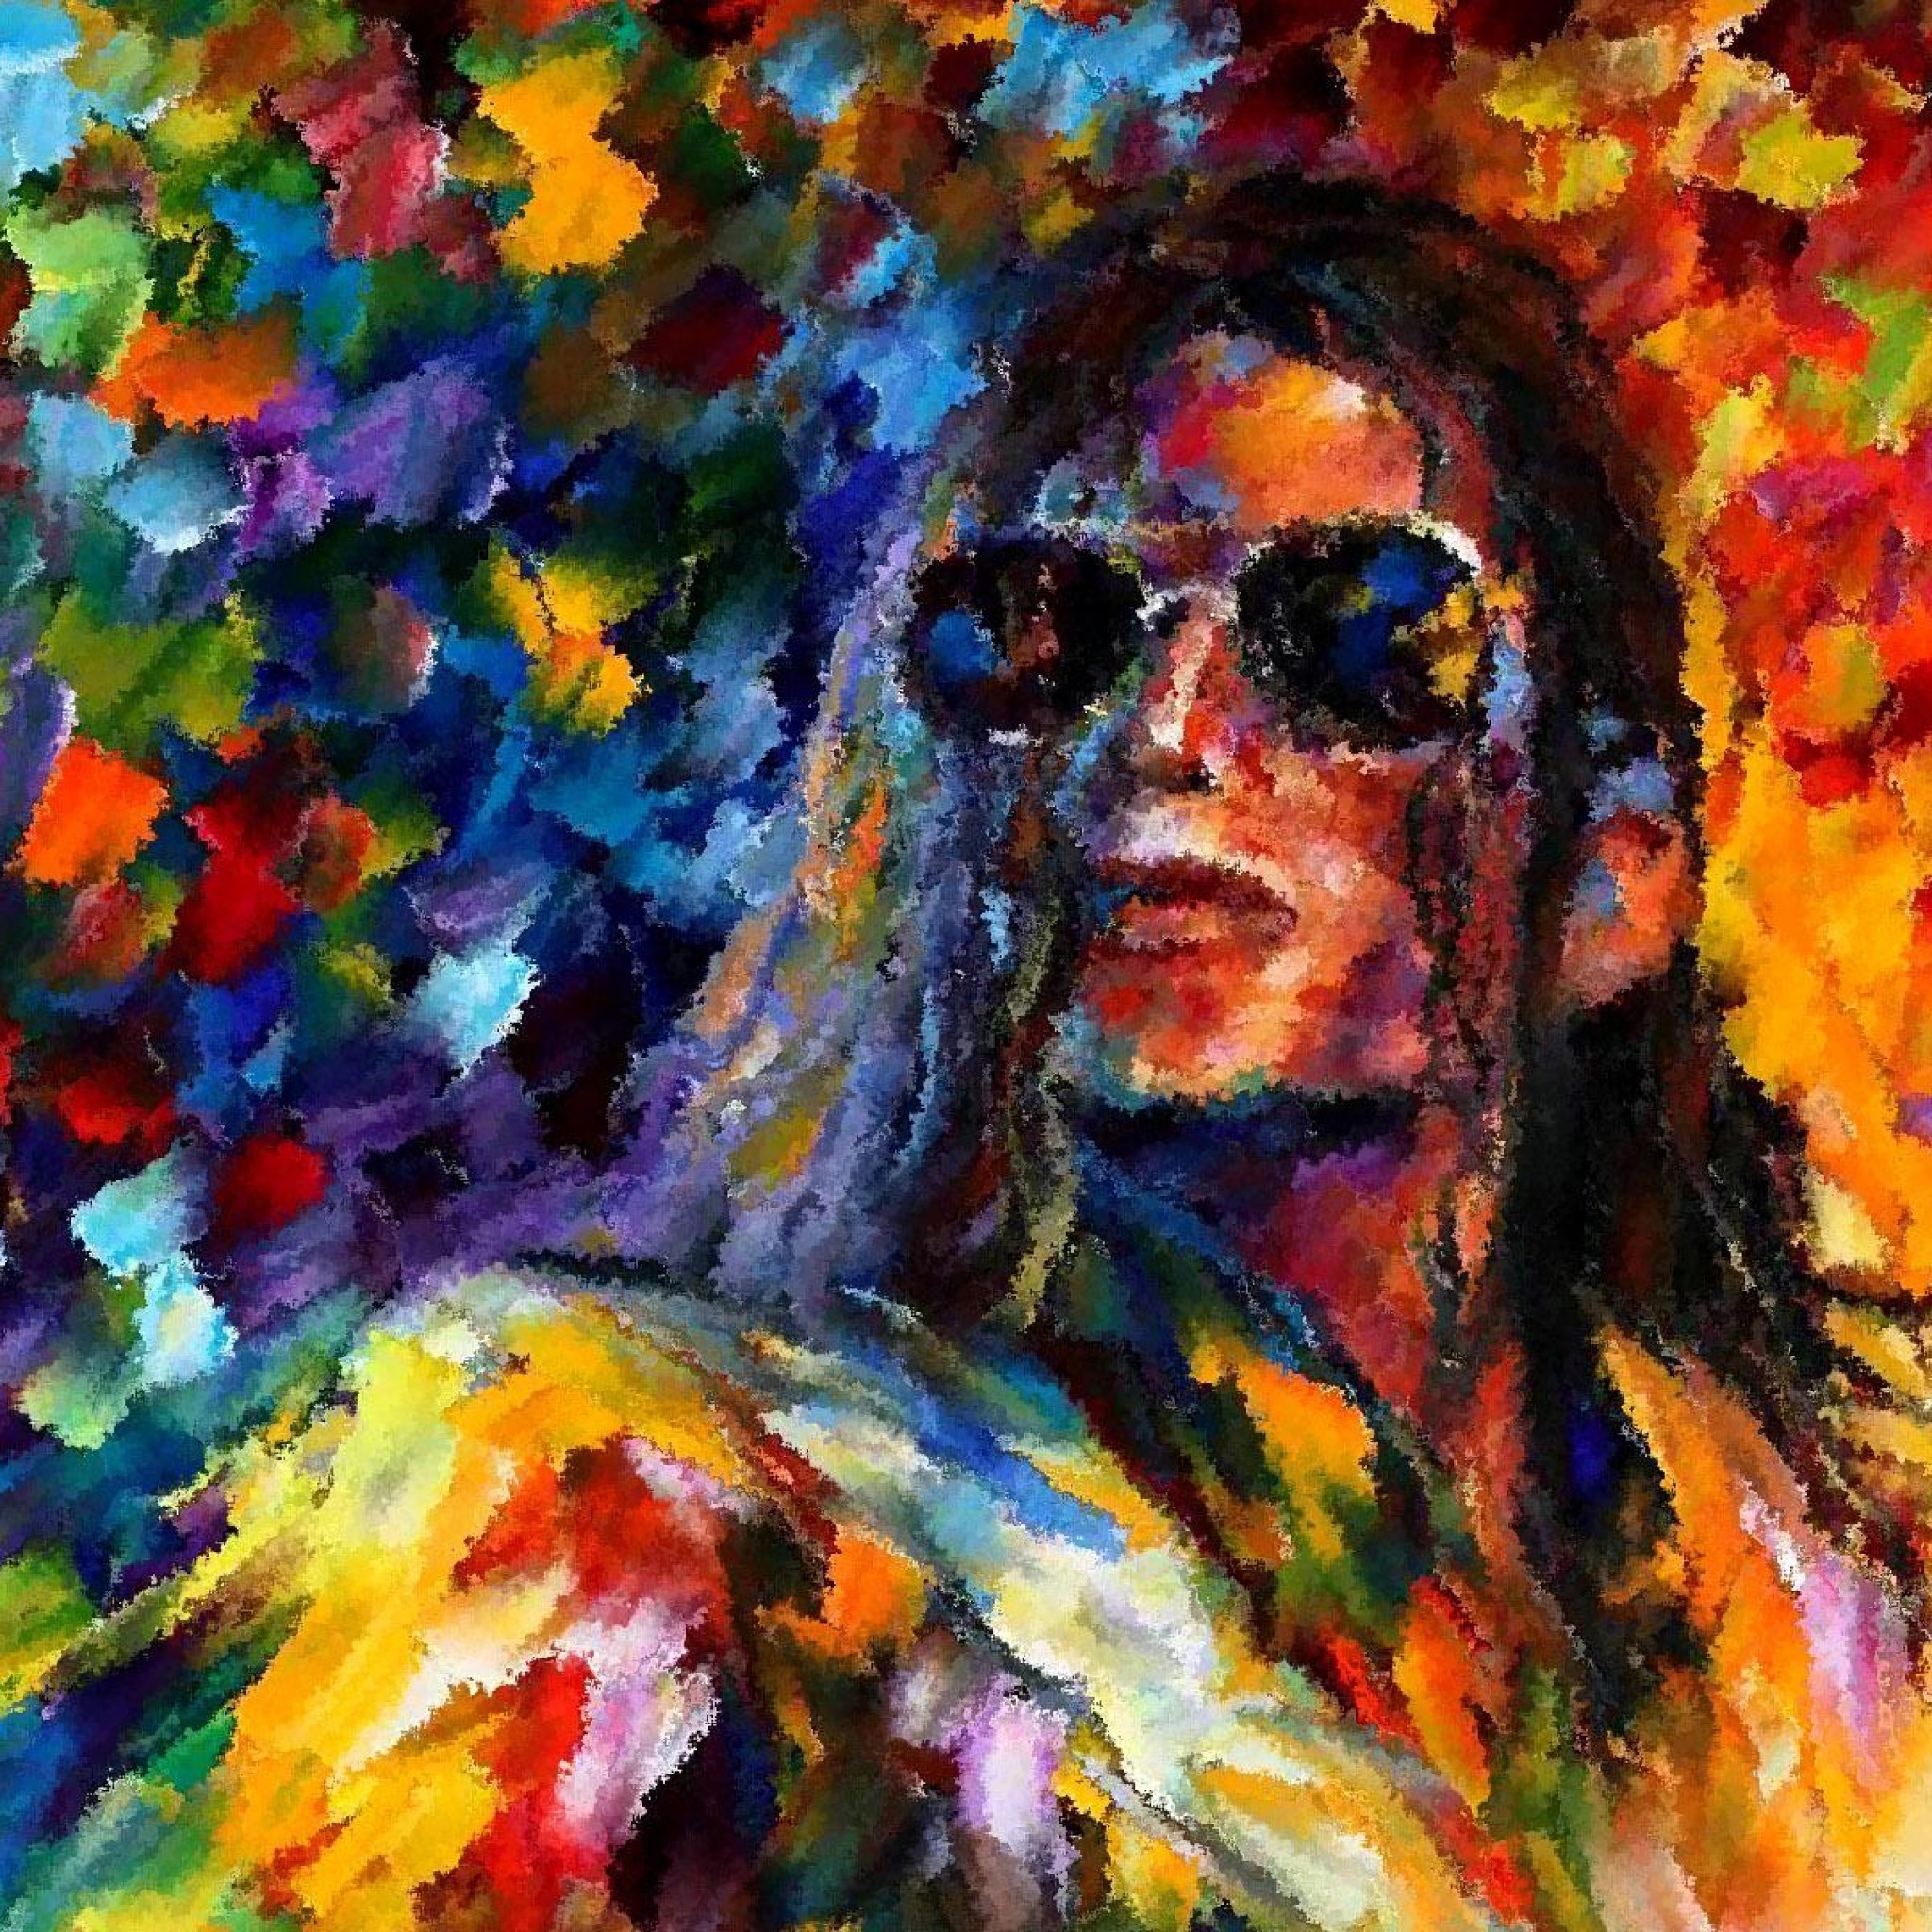 Michael Jackson Painting Wallpaper Wallpapers Kingdom Ipad